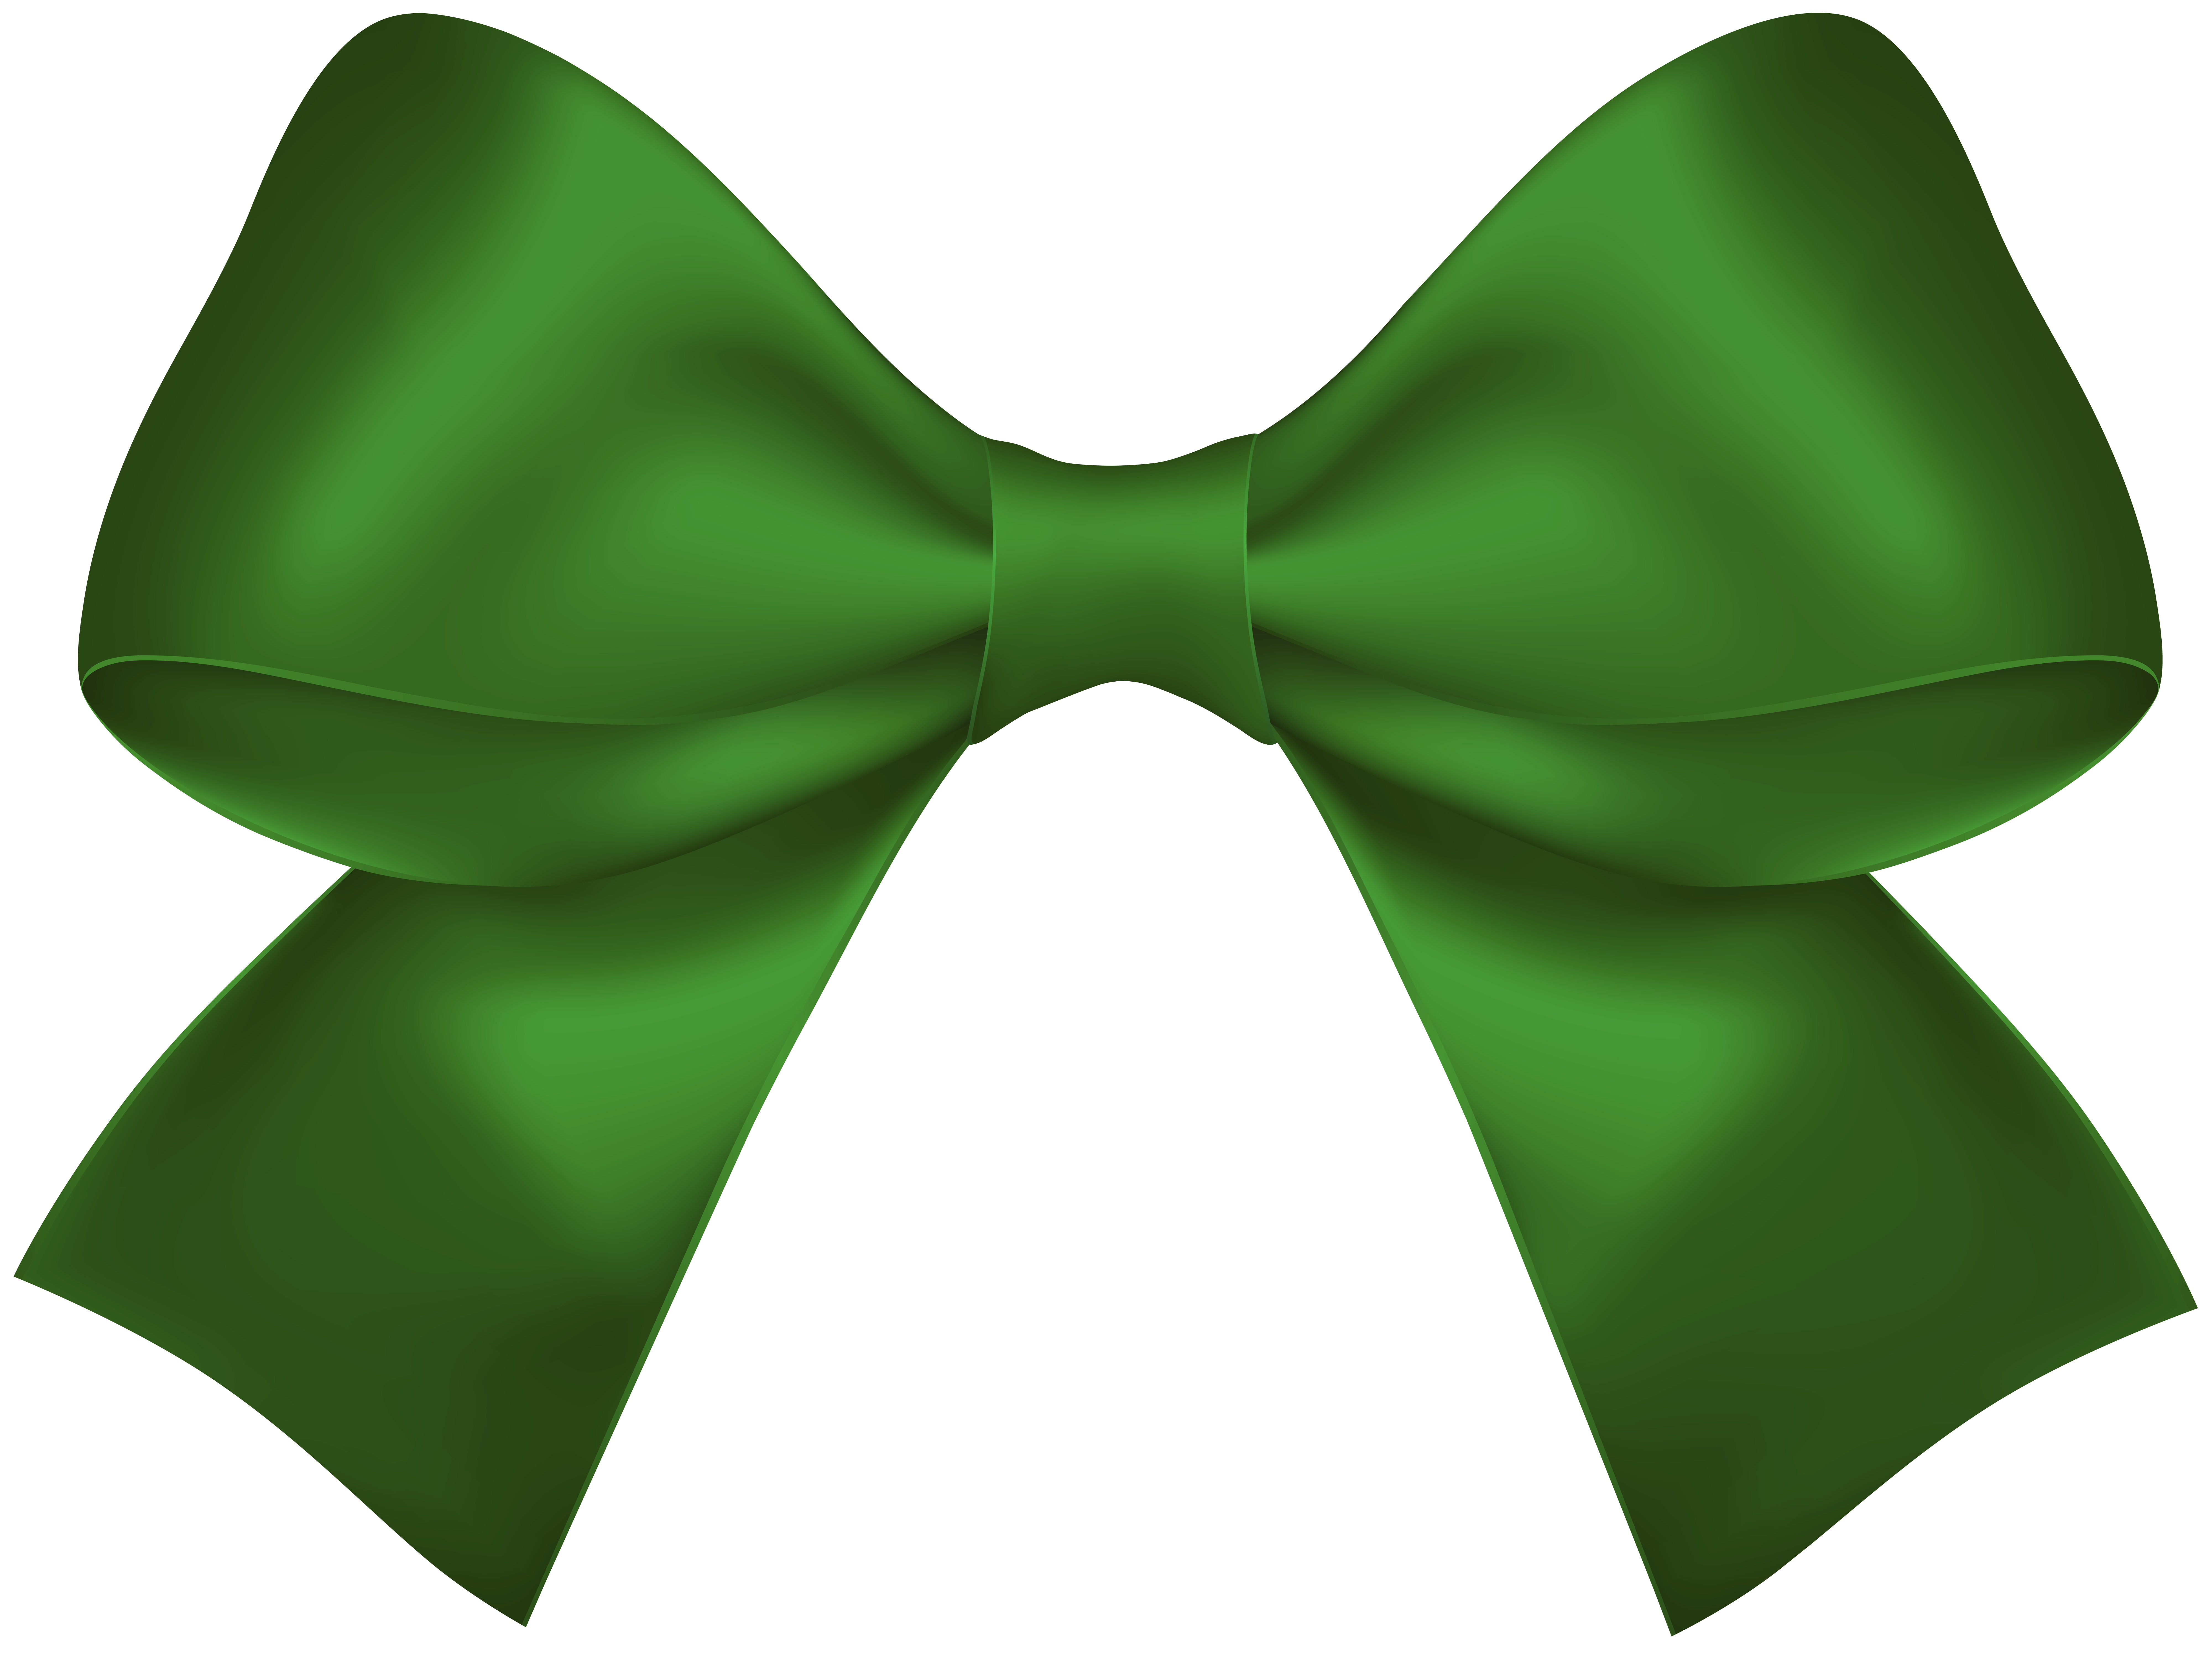 green ribbon bow clip art